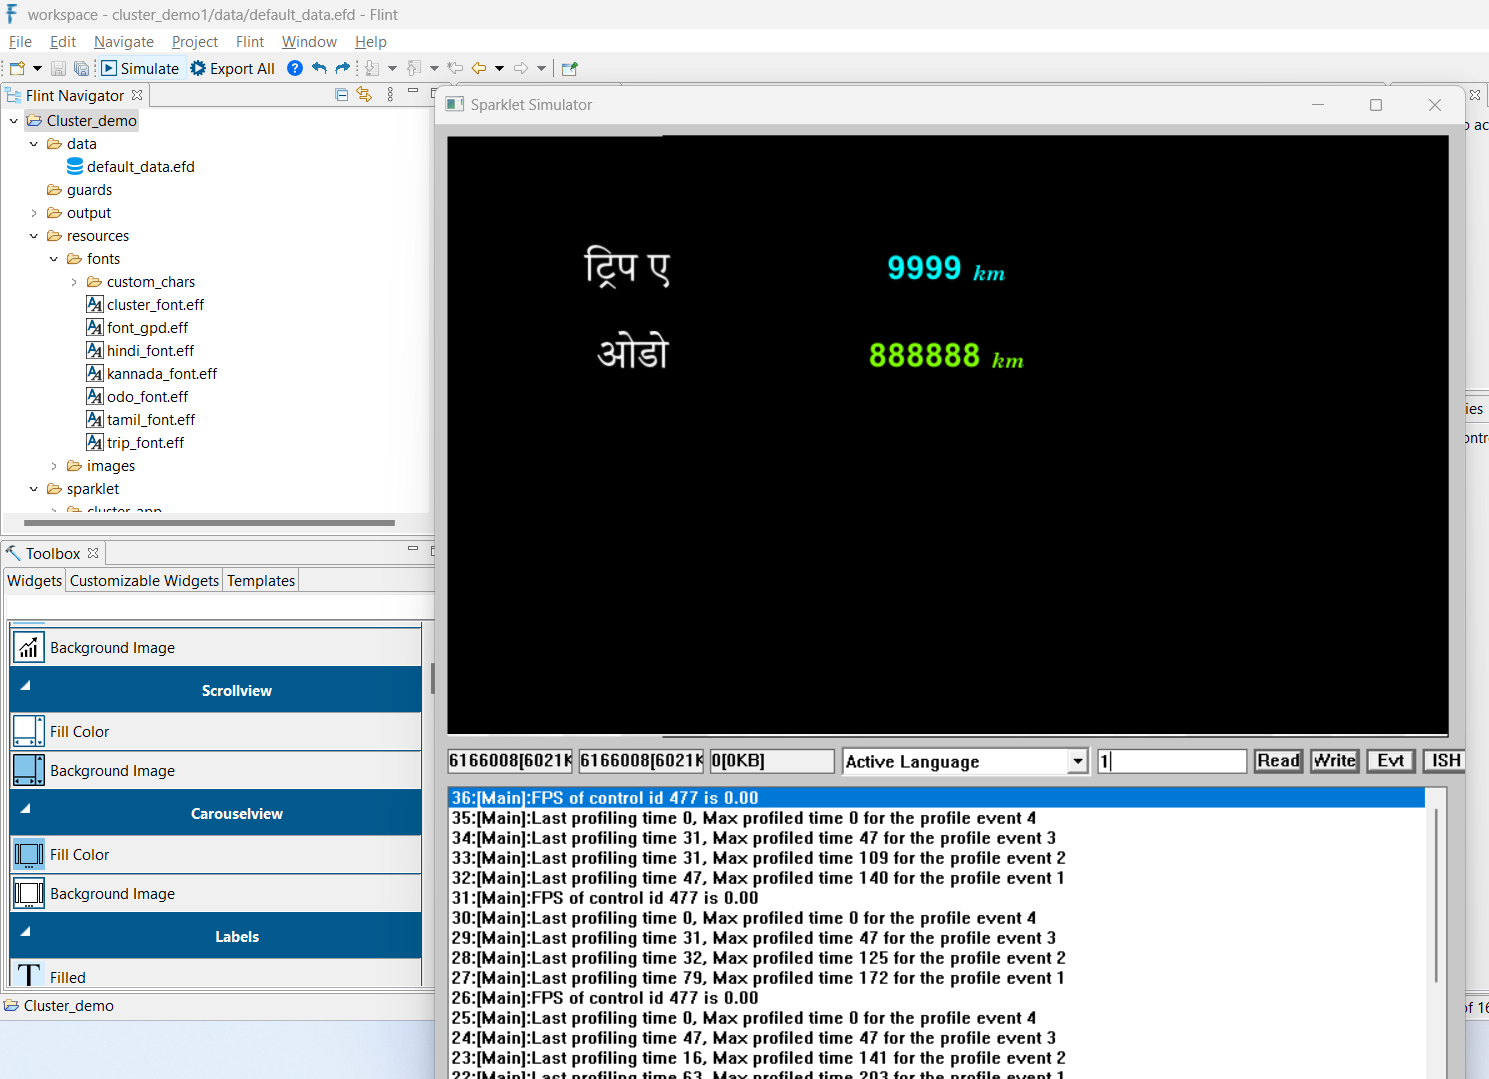 Simulation Window (Active language-Hindi)